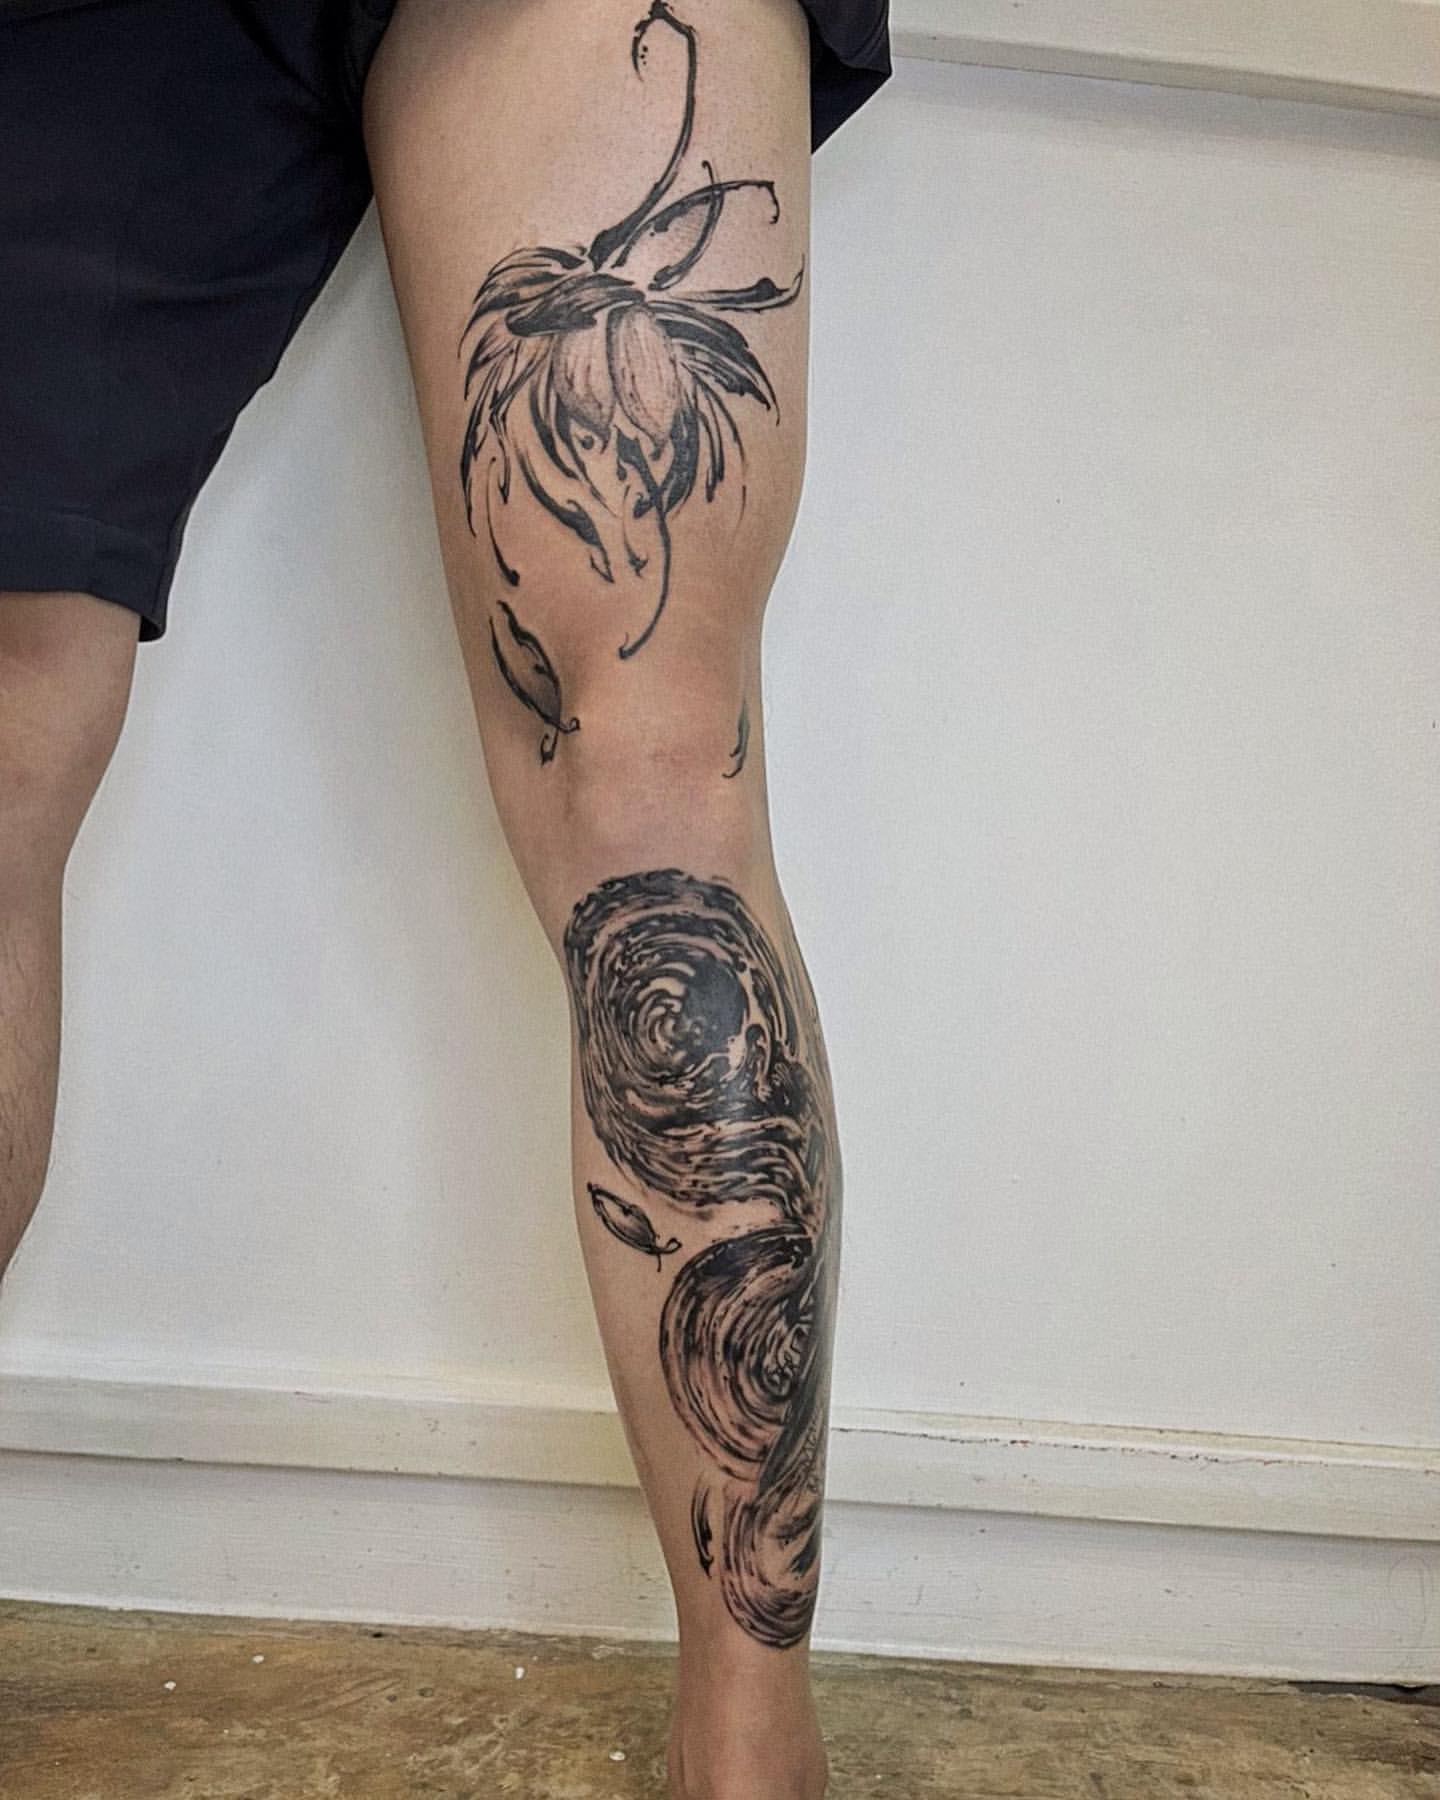 Best leg tattoos for men, Cool leg tattoos 2k22